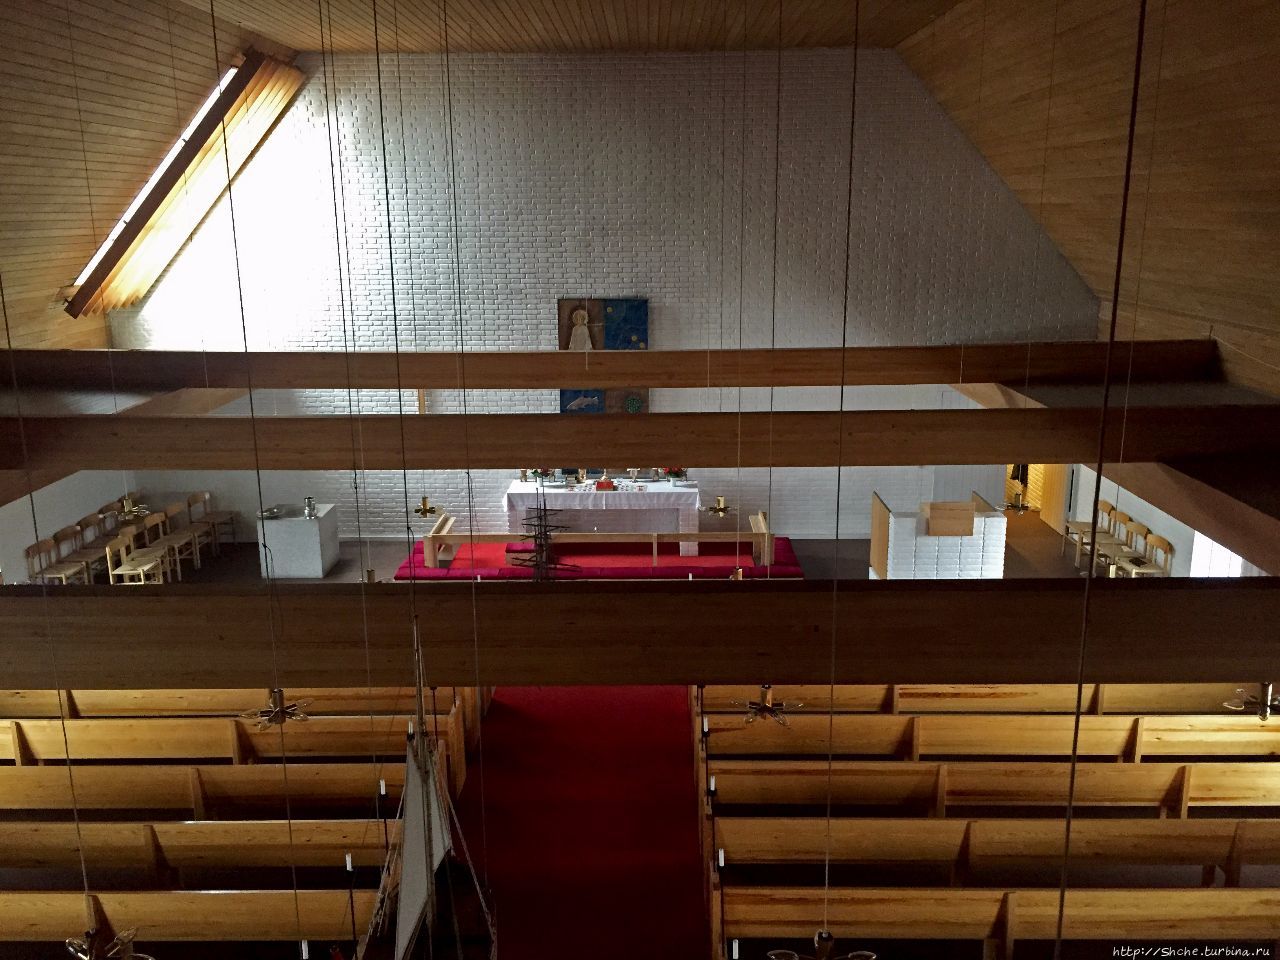 Церковь Ганса Эгеда Аазиат, Гренландия